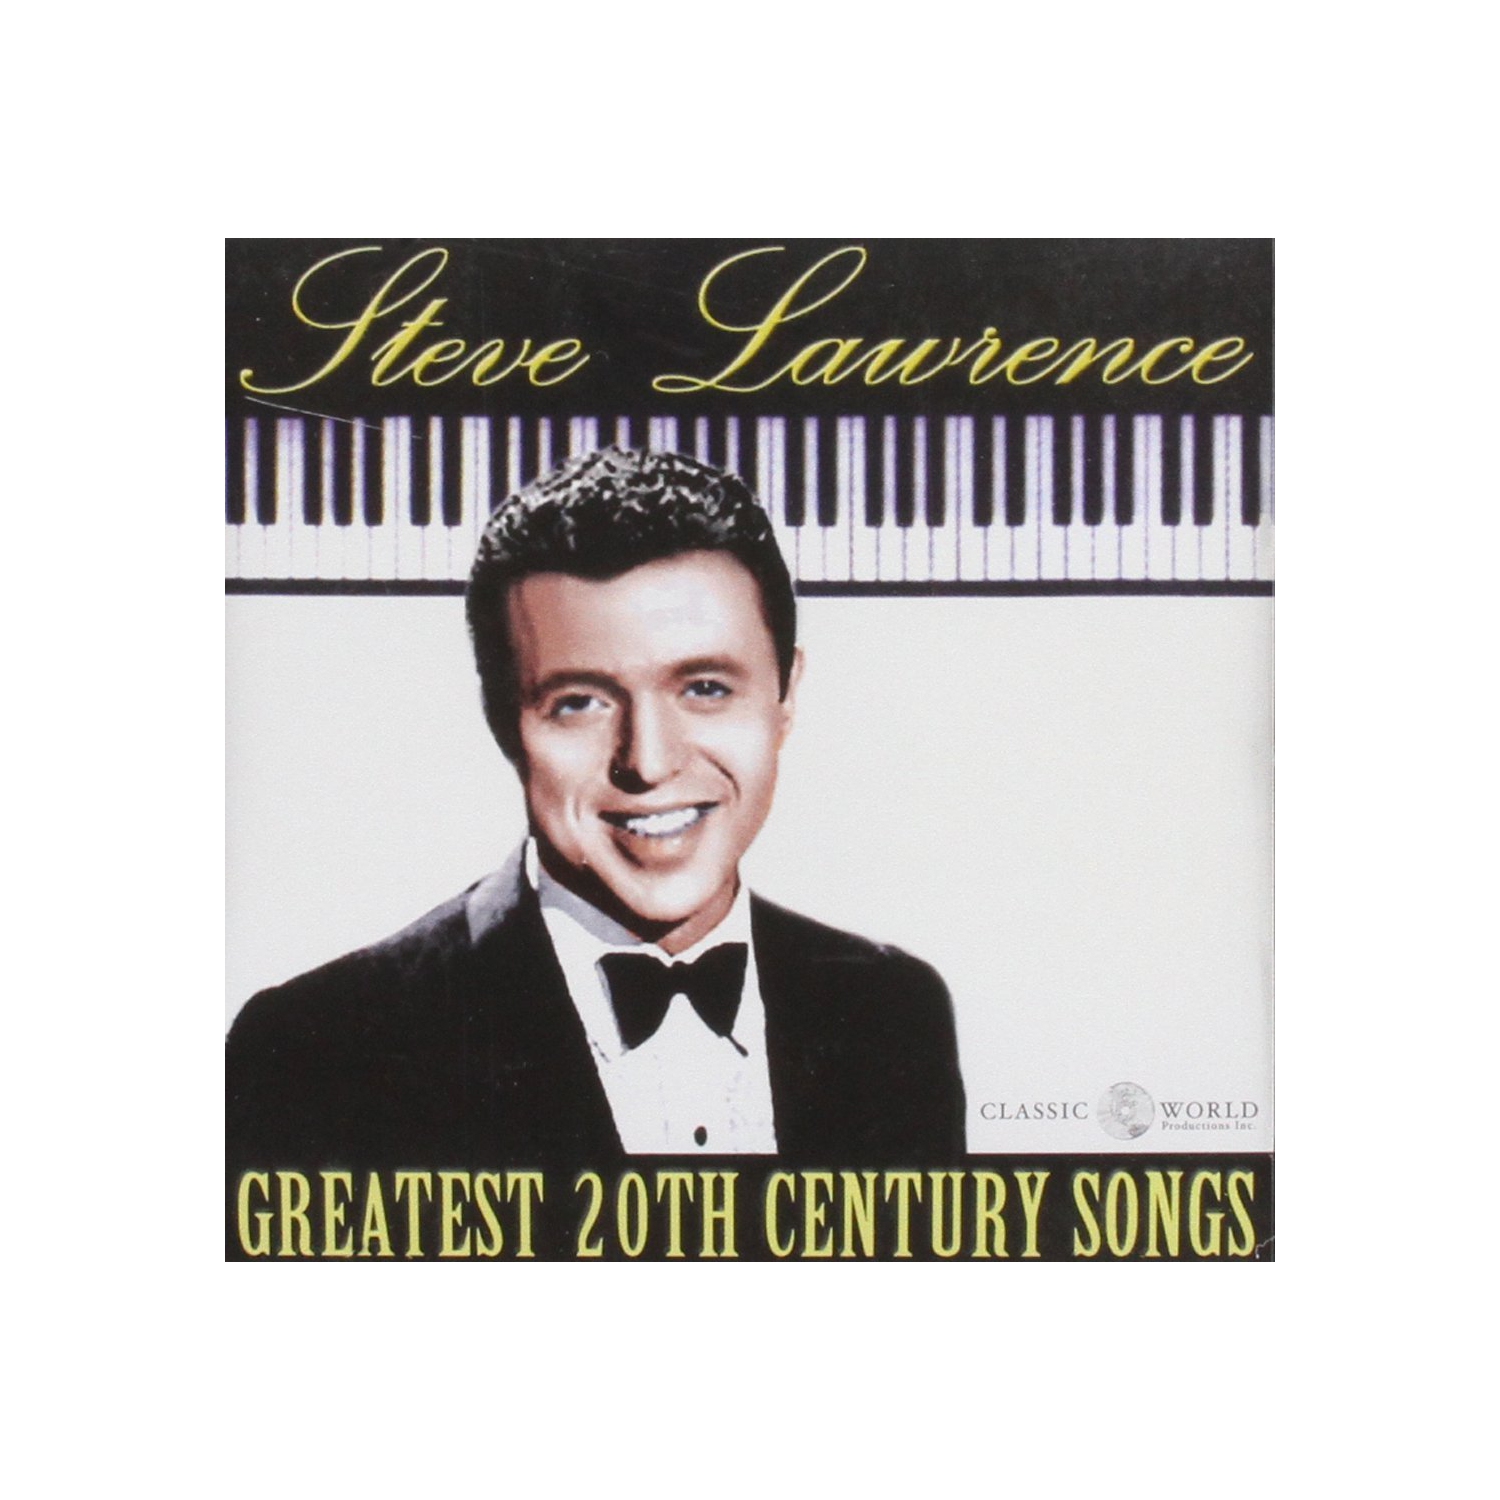 Greatest 20th Century Songs [Audio CD] Lawrence, Steve